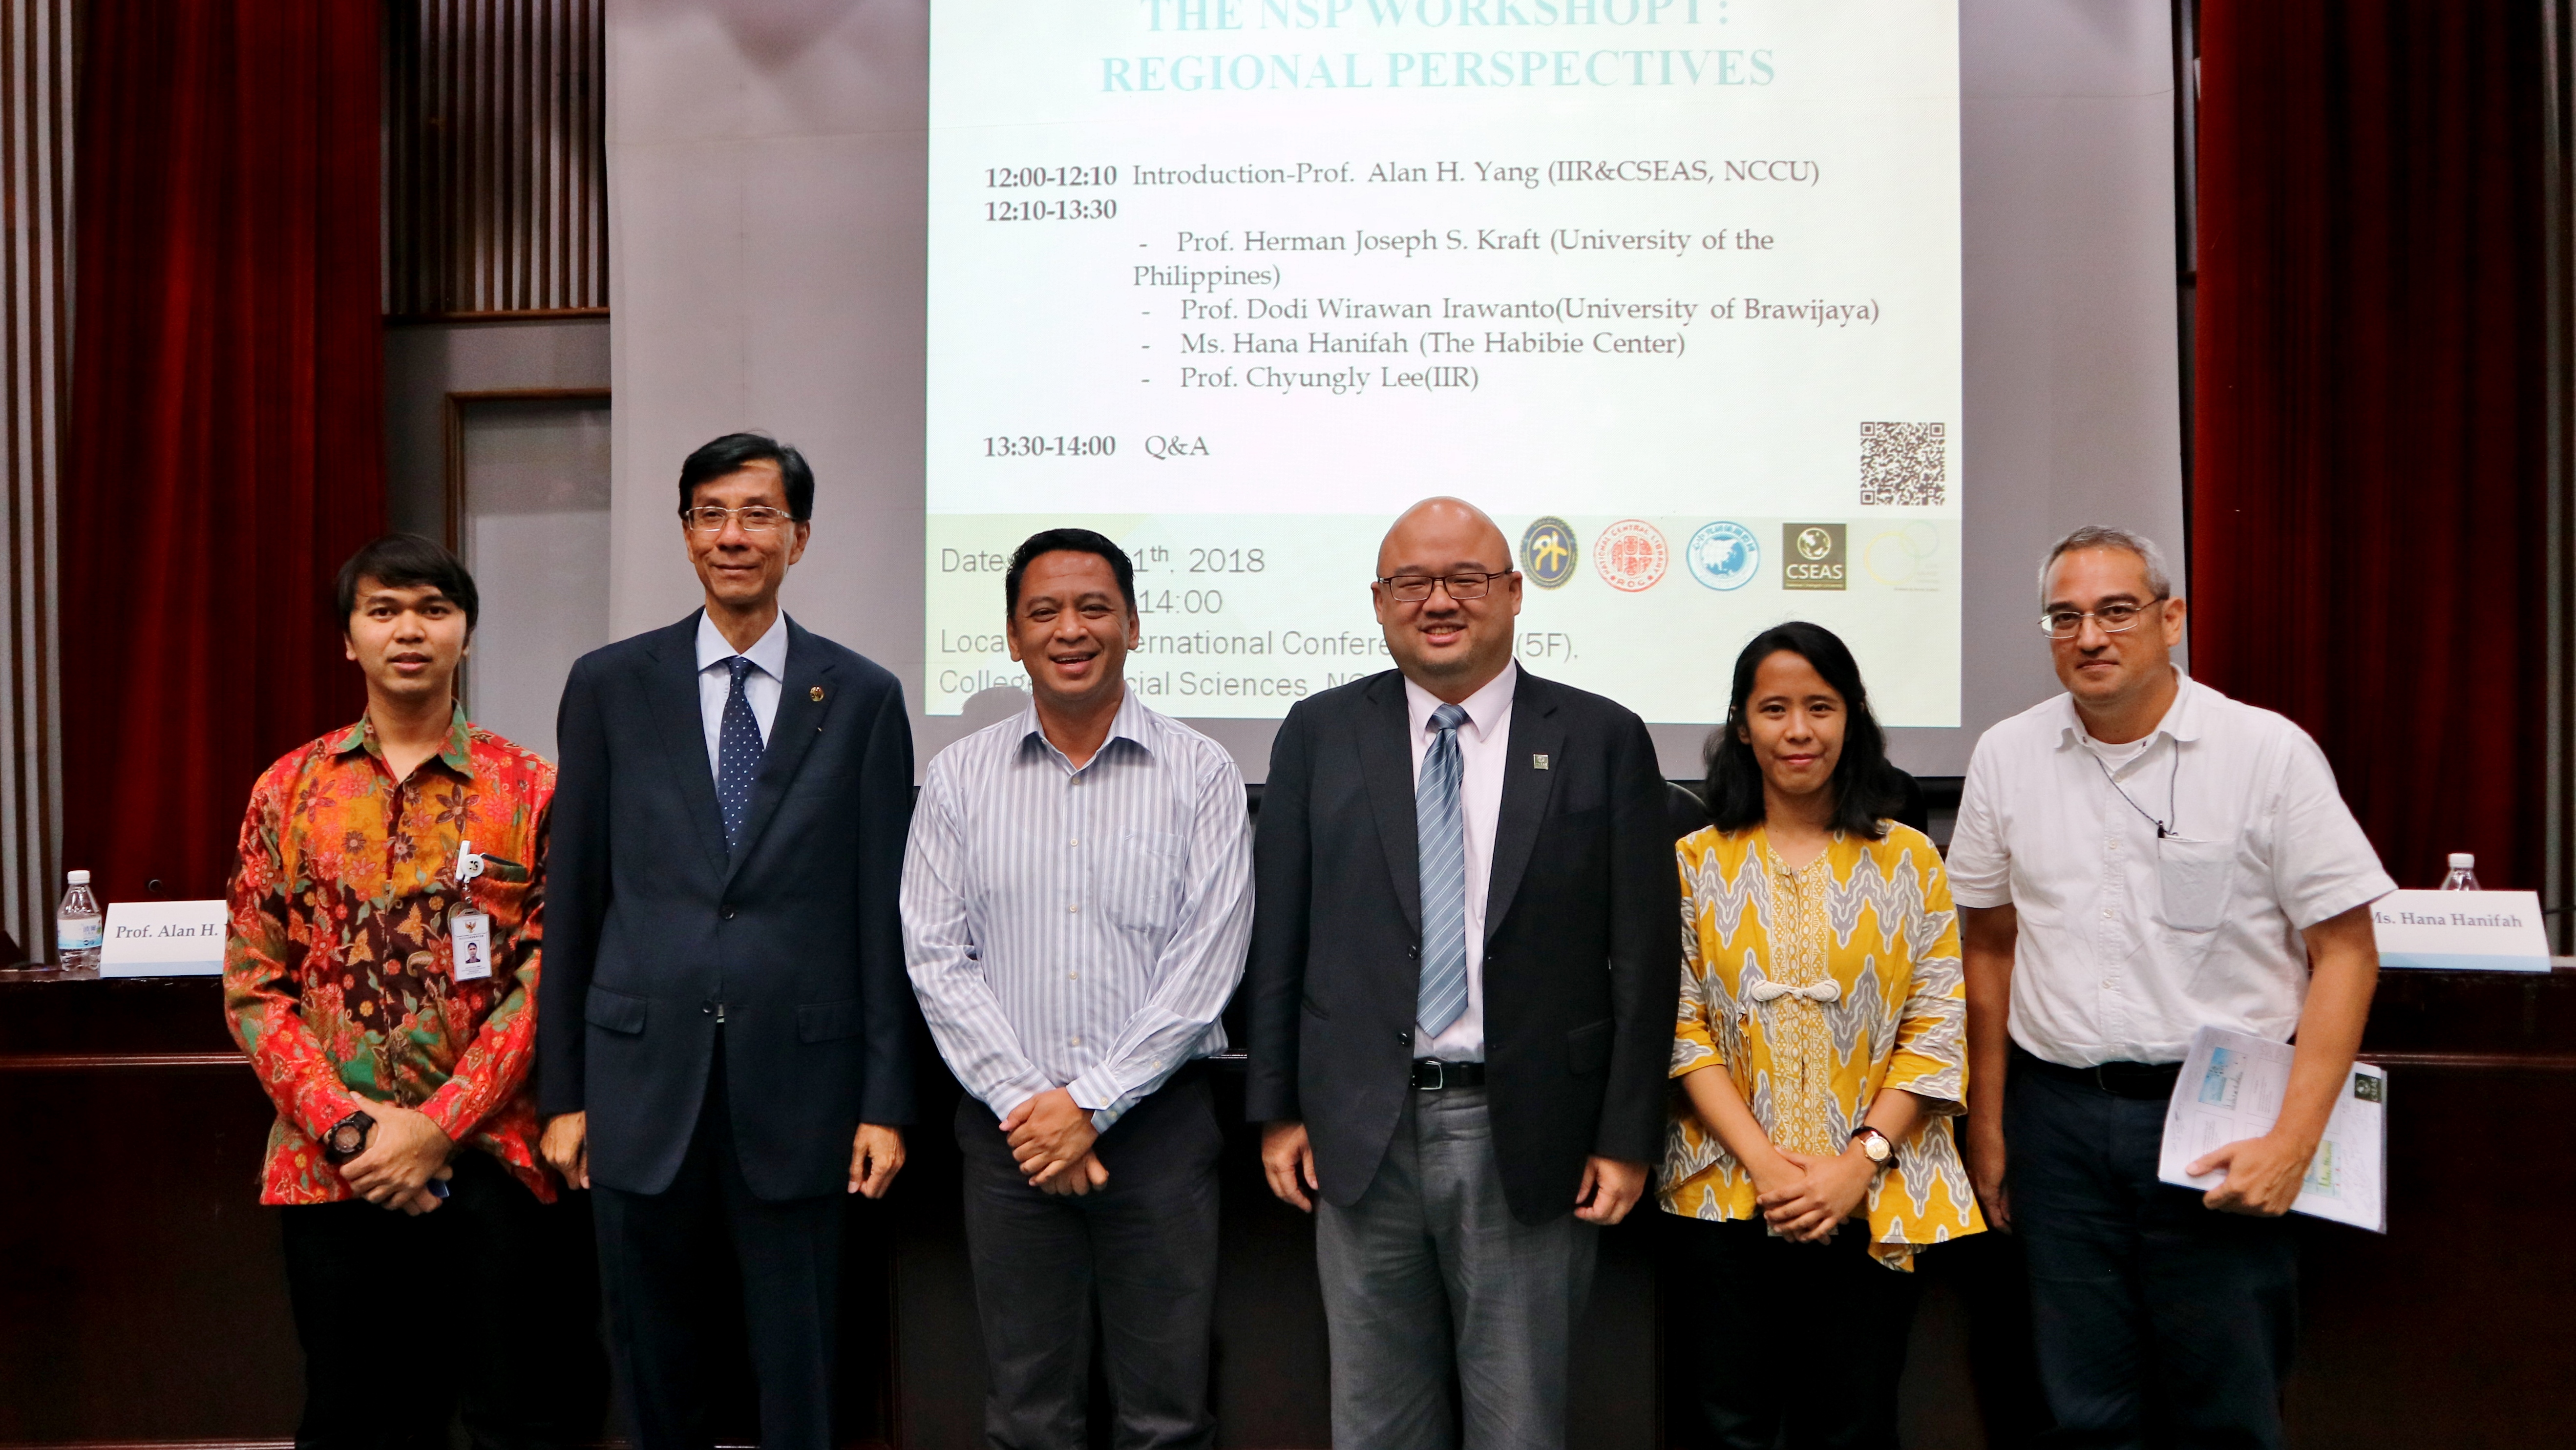 Link: 2018 2nd Presentations of MOFA Taiwan Fellowship Scholars - NSP Workshop (I) at NCCU